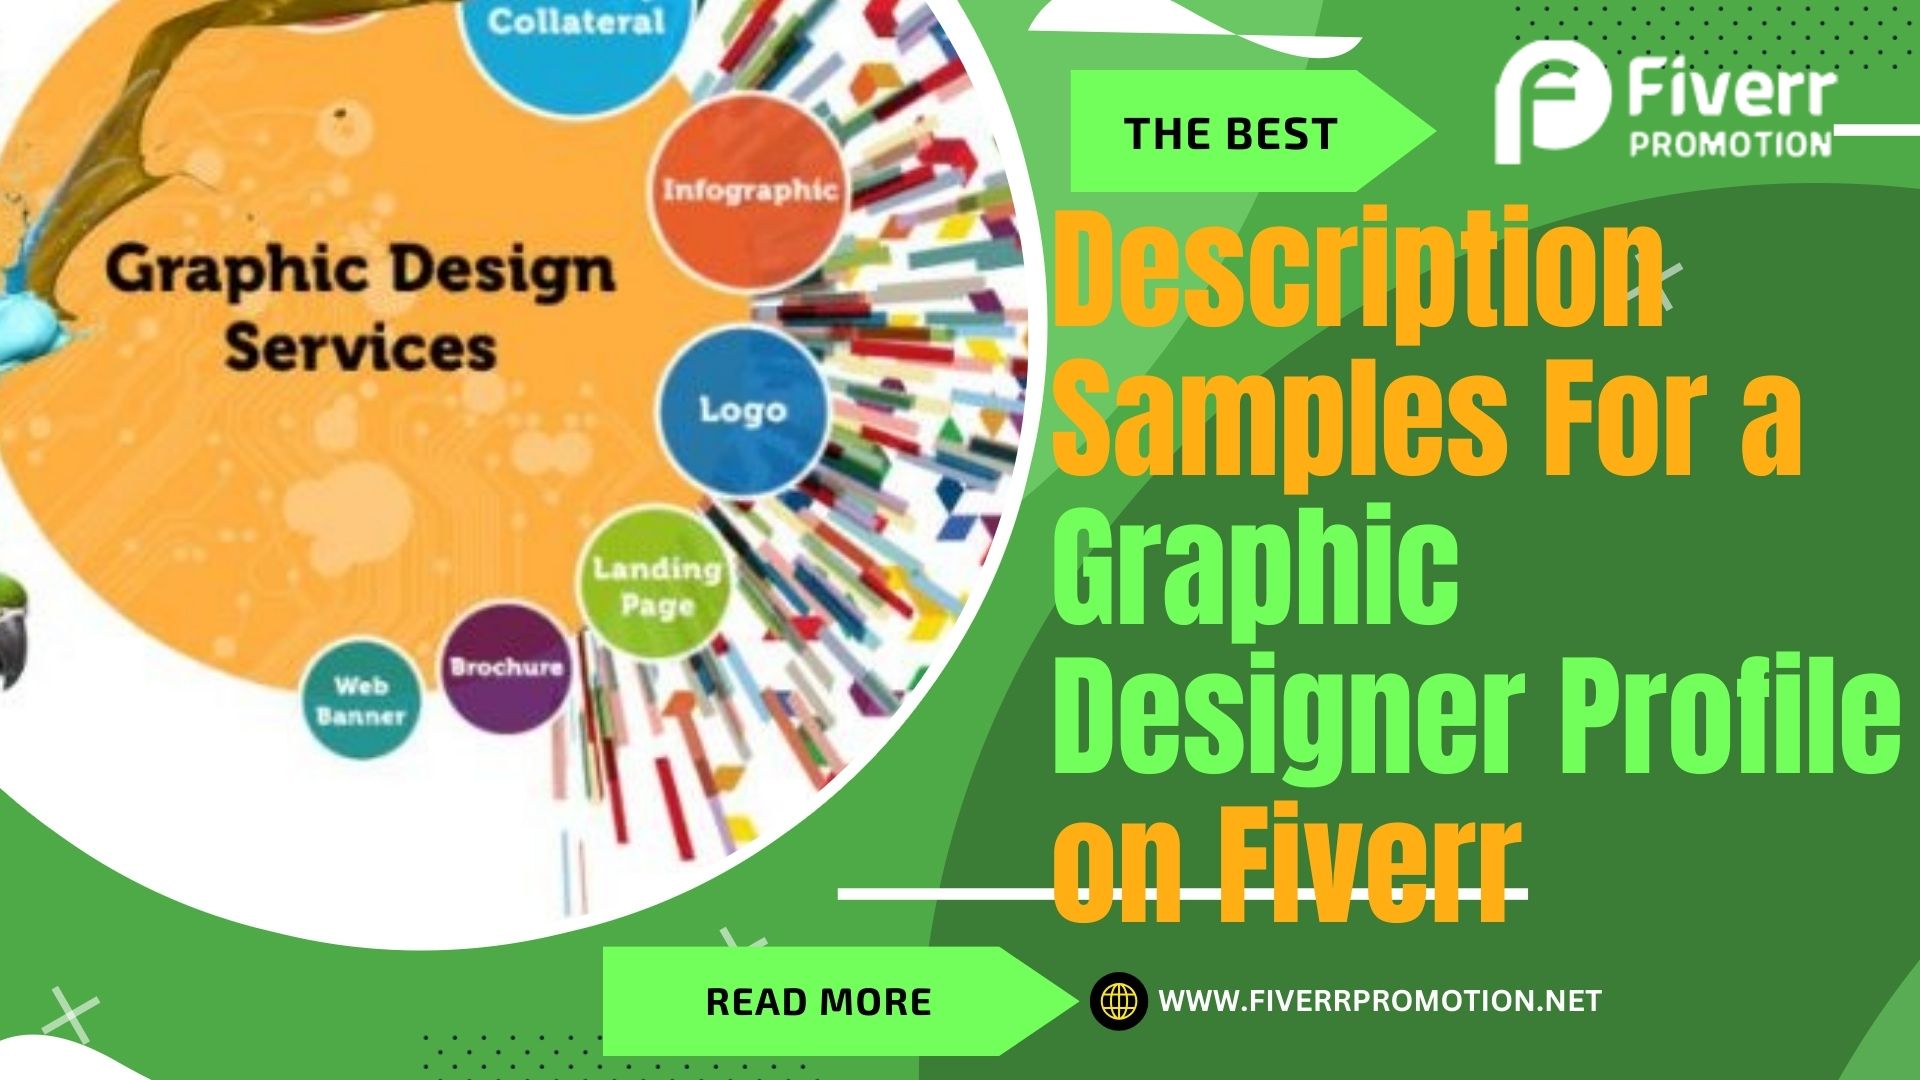 The Best Description Samples For a Graphic Designer Profile on Fiverr